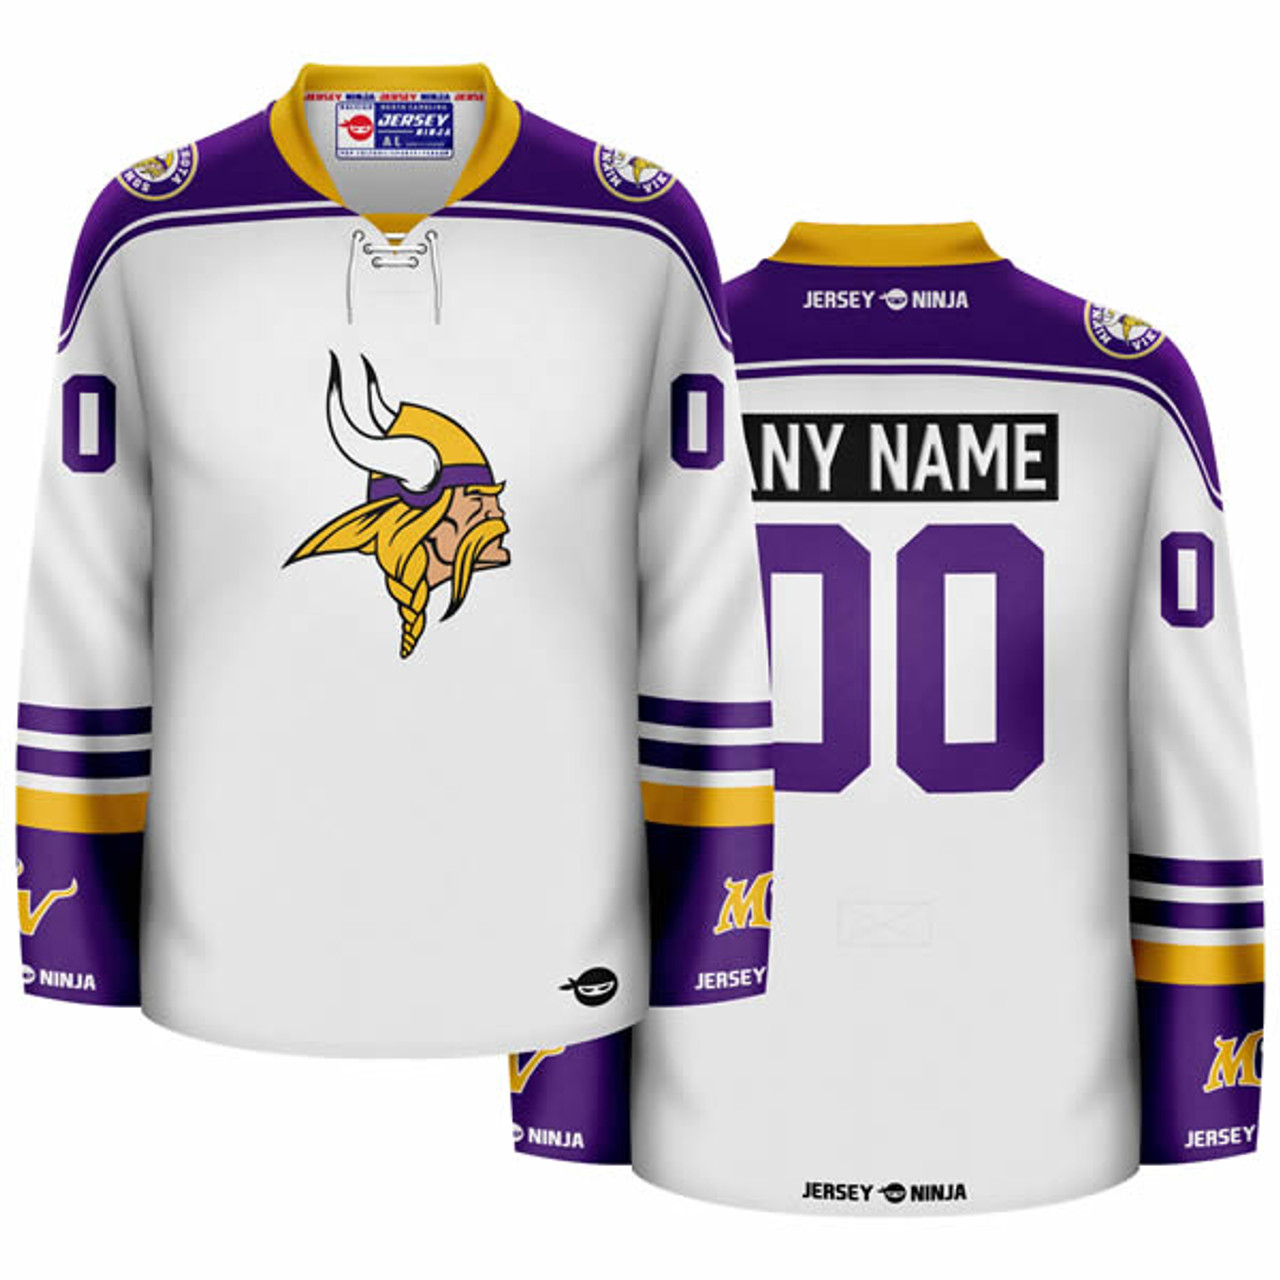 Jersey Ninja - Minnesota Vikings White Hockey Jersey